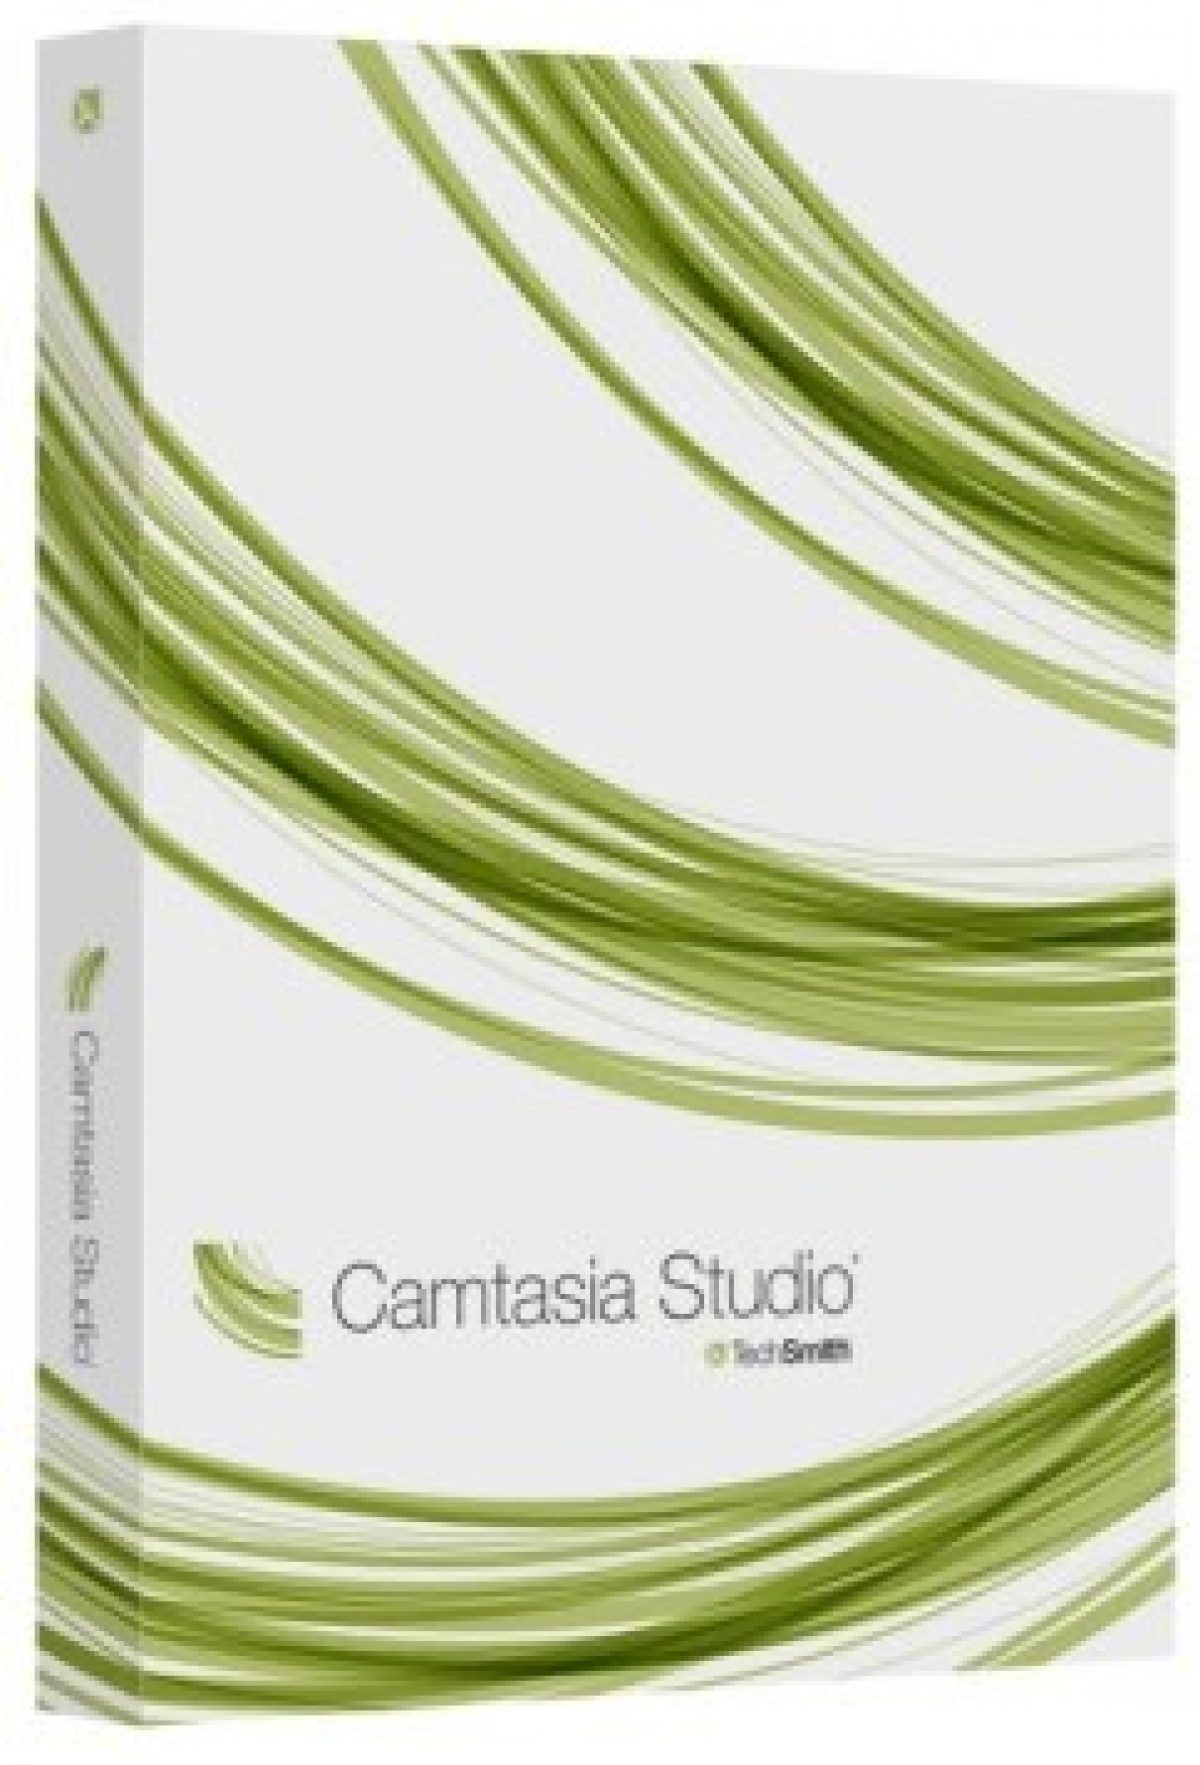 get camtasia studio 9 for free